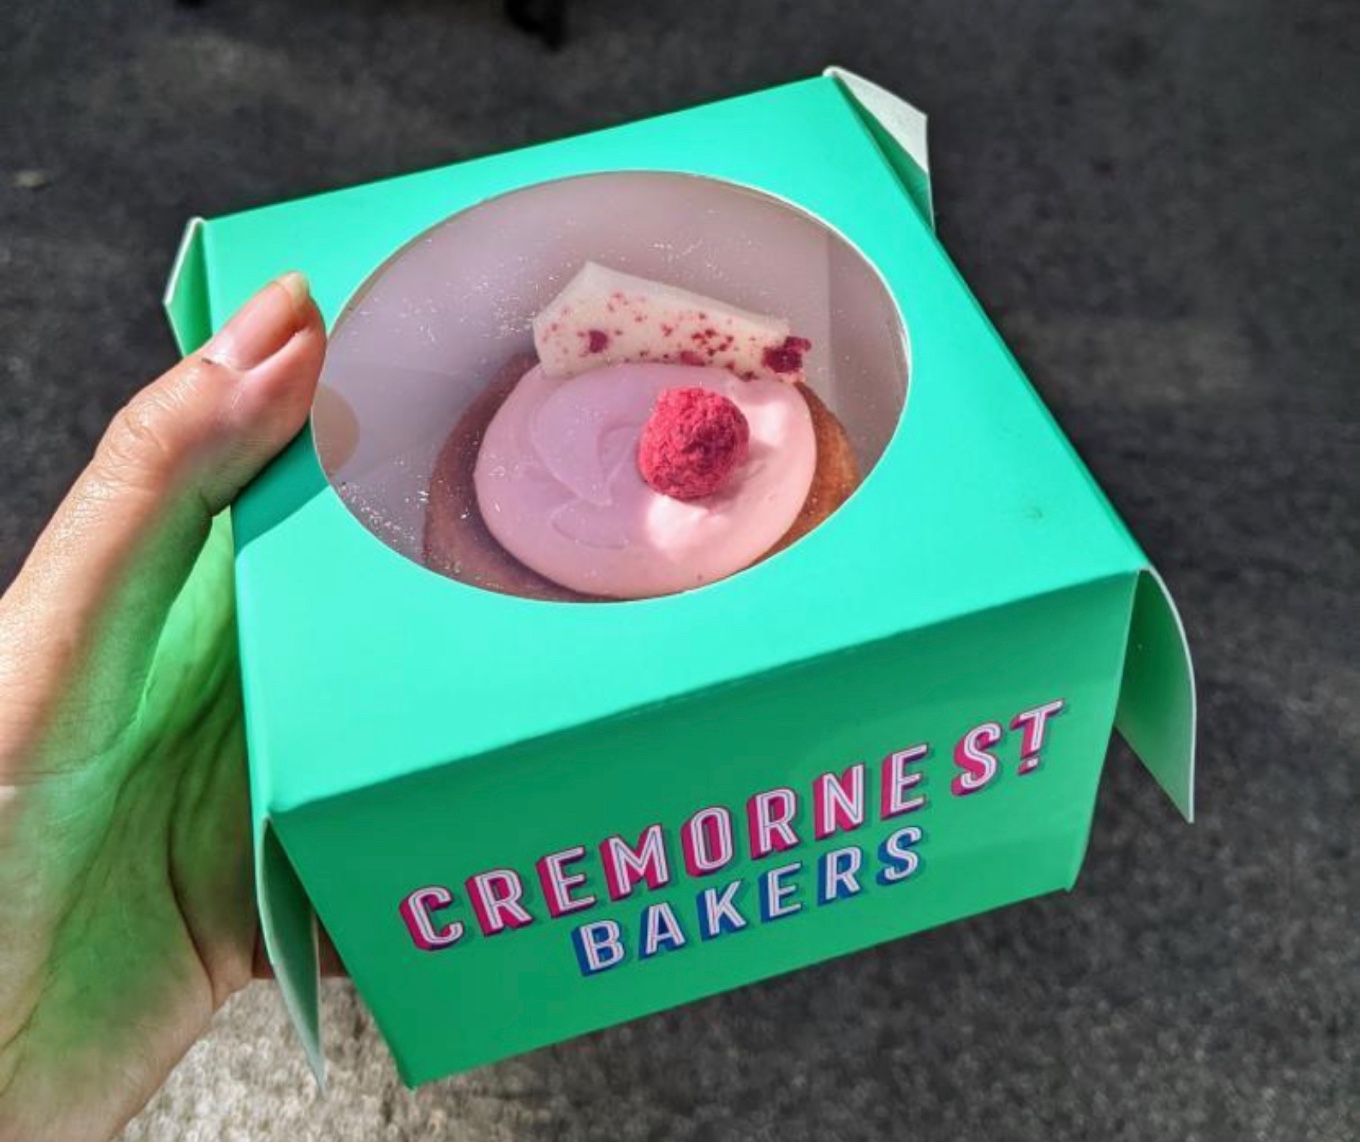 Cremorne Street Bakers Box